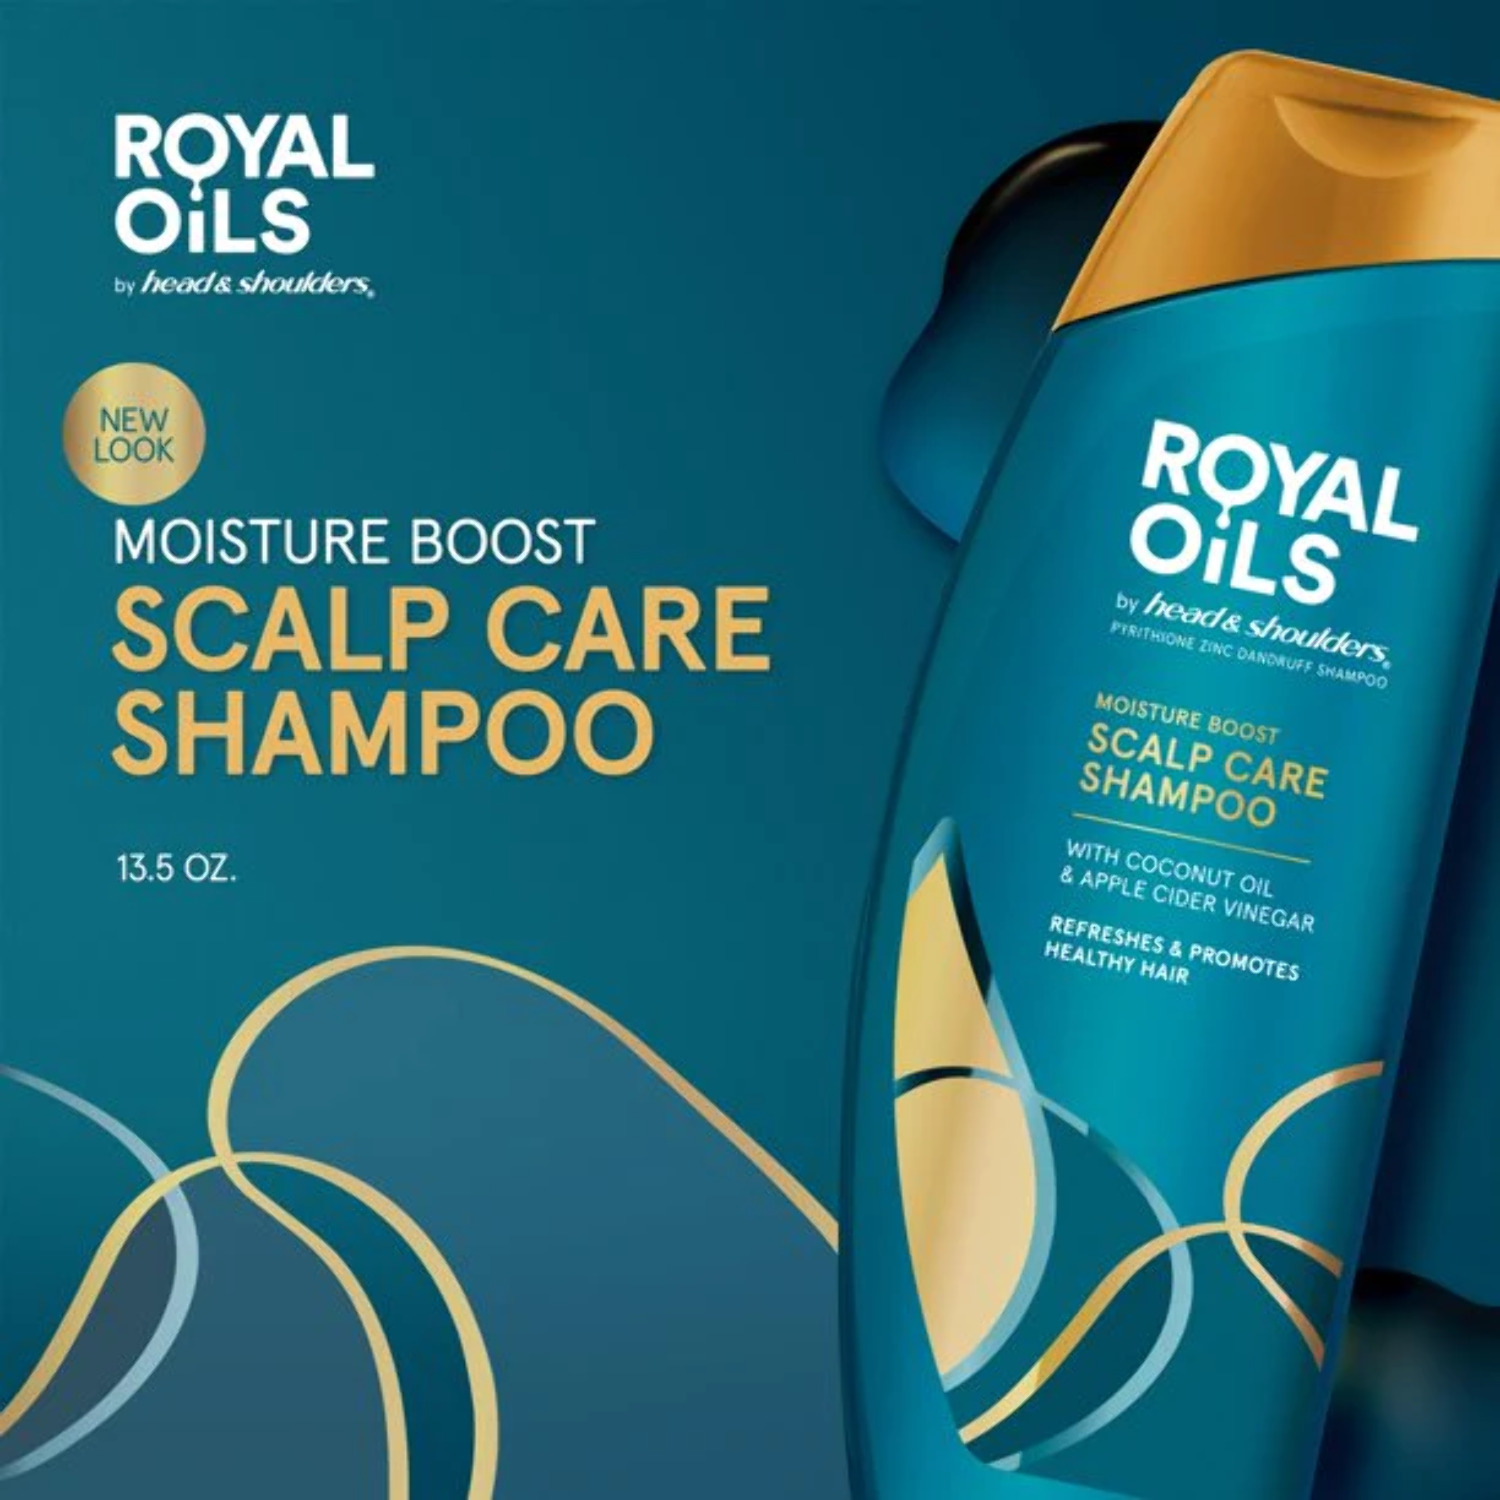 Head & Shoulders Royal Oils Moisturizing Scalp Care Daily Shampoo with Coconut Oil, 13.5 fl oz - image 5 of 9